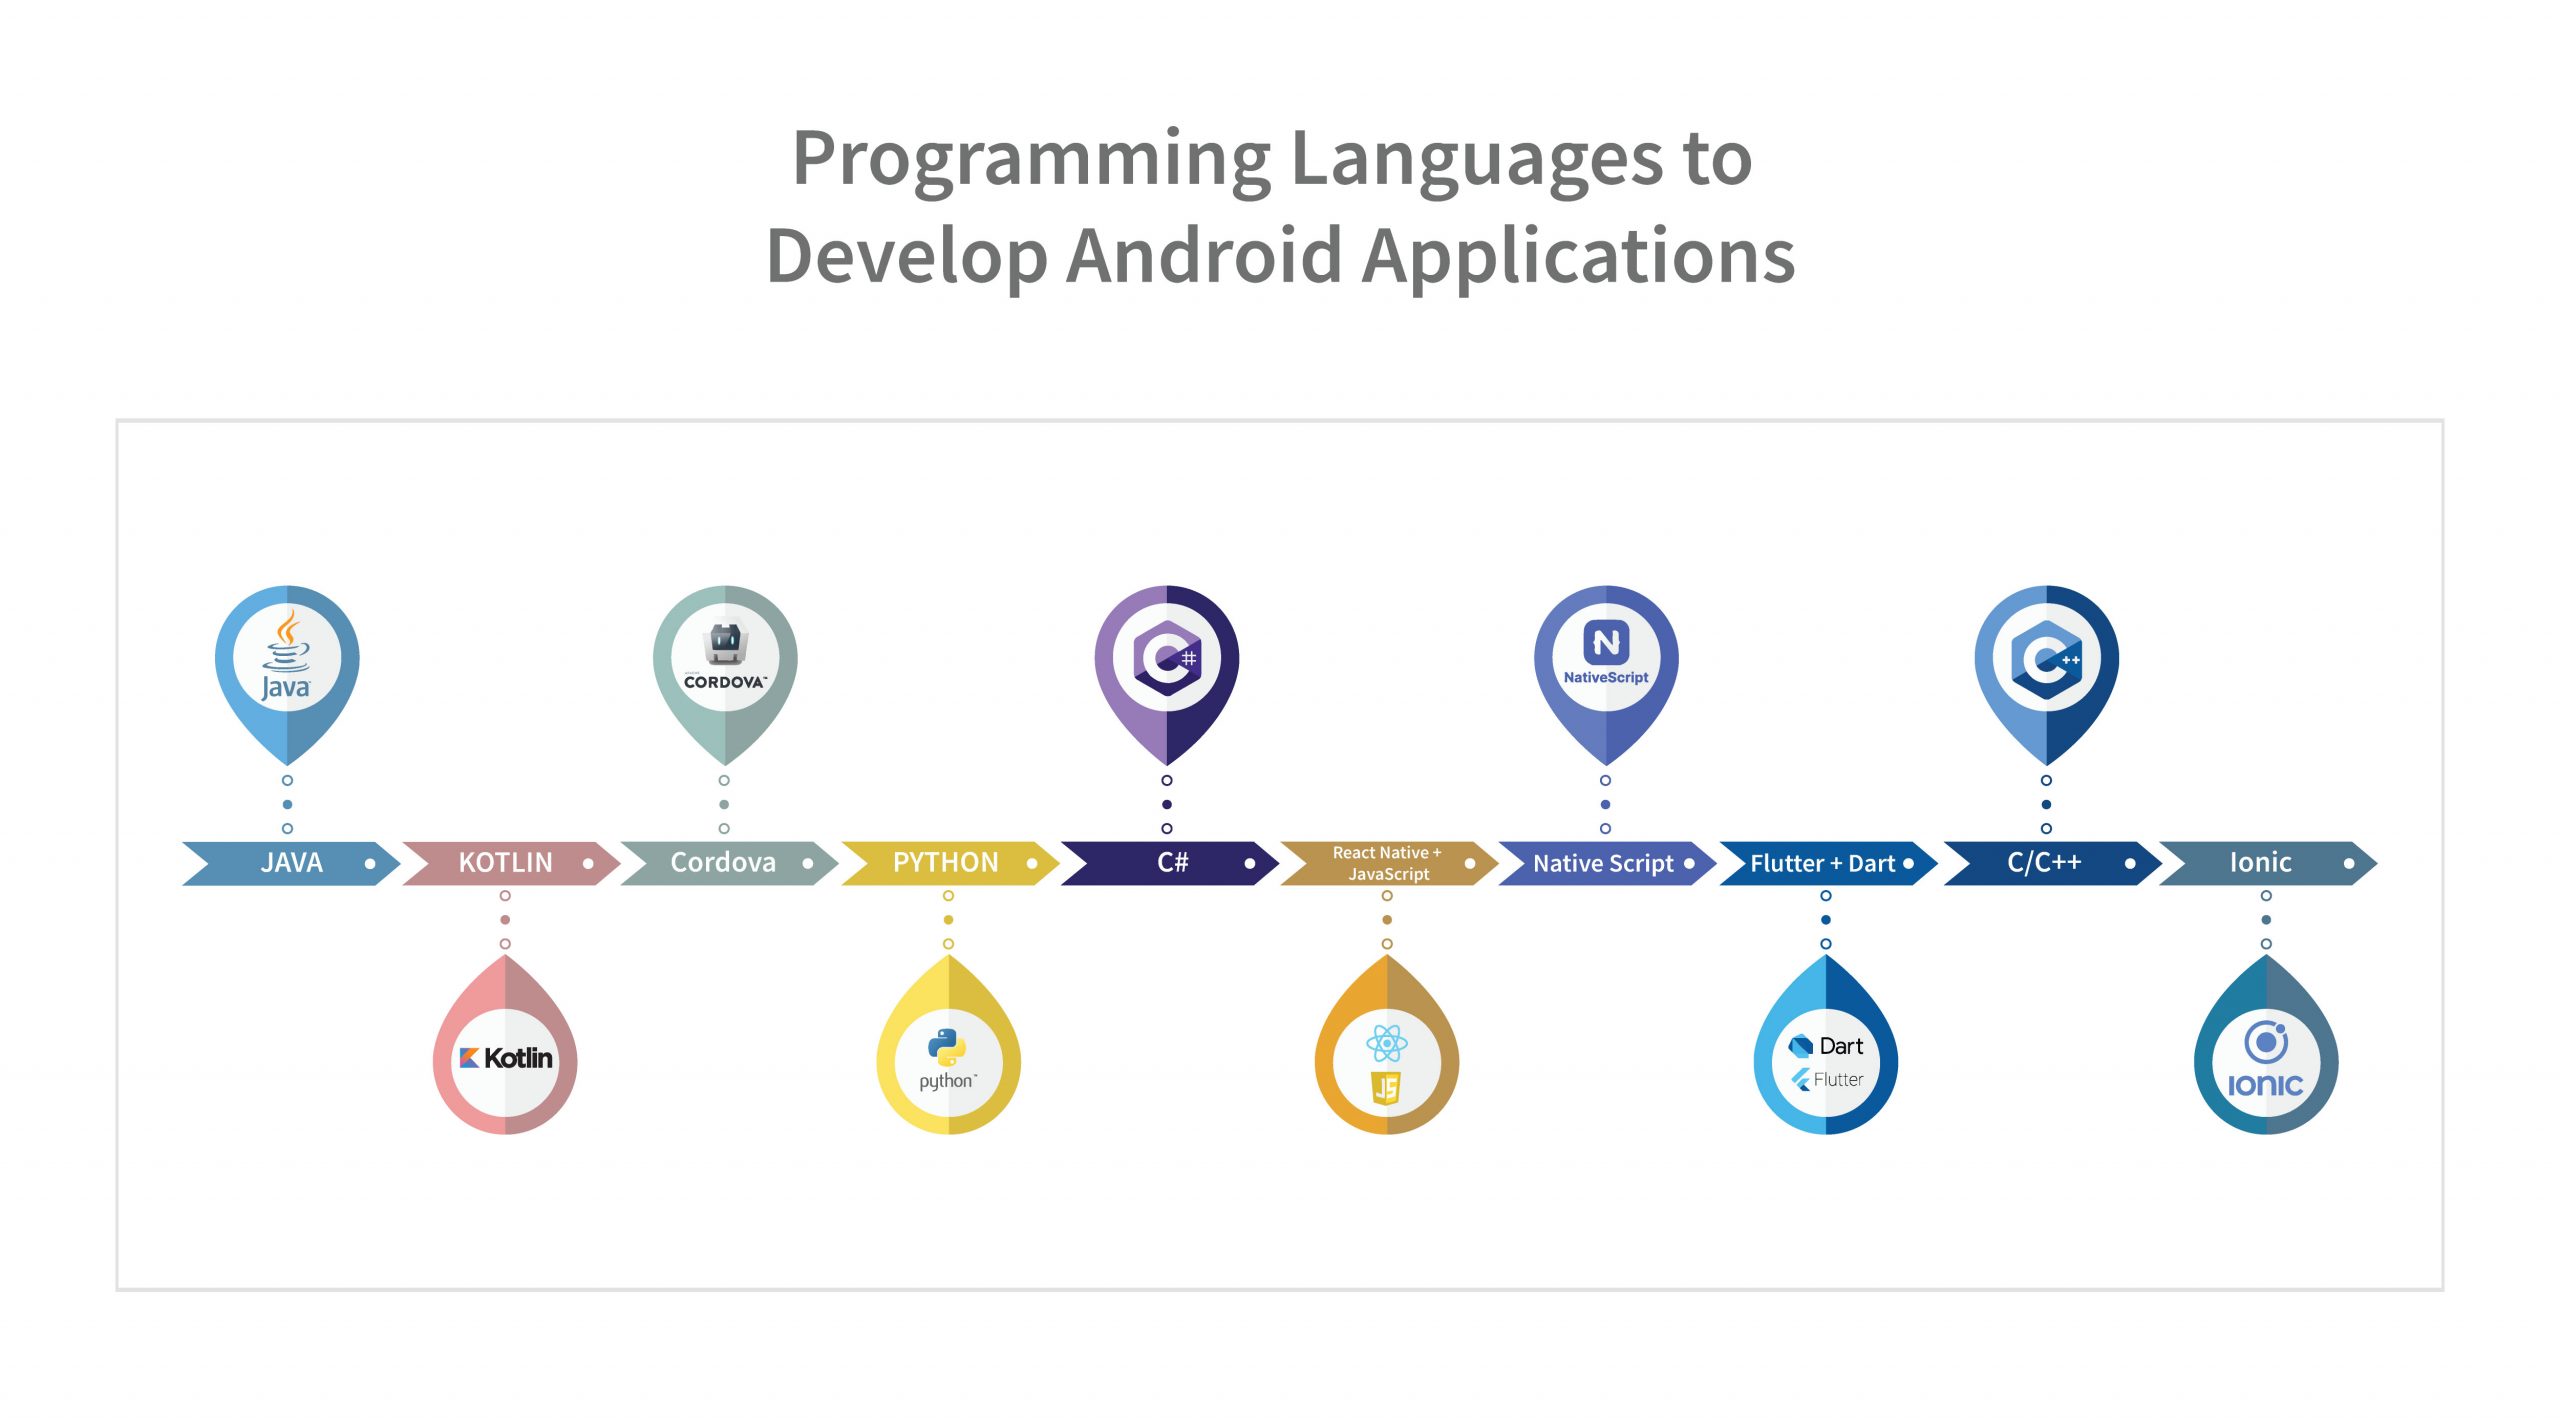 <img src="Programming-Languages-to-Develop-Android-Applications.jpg" alt="Programming Languages to Develop Android Applications">